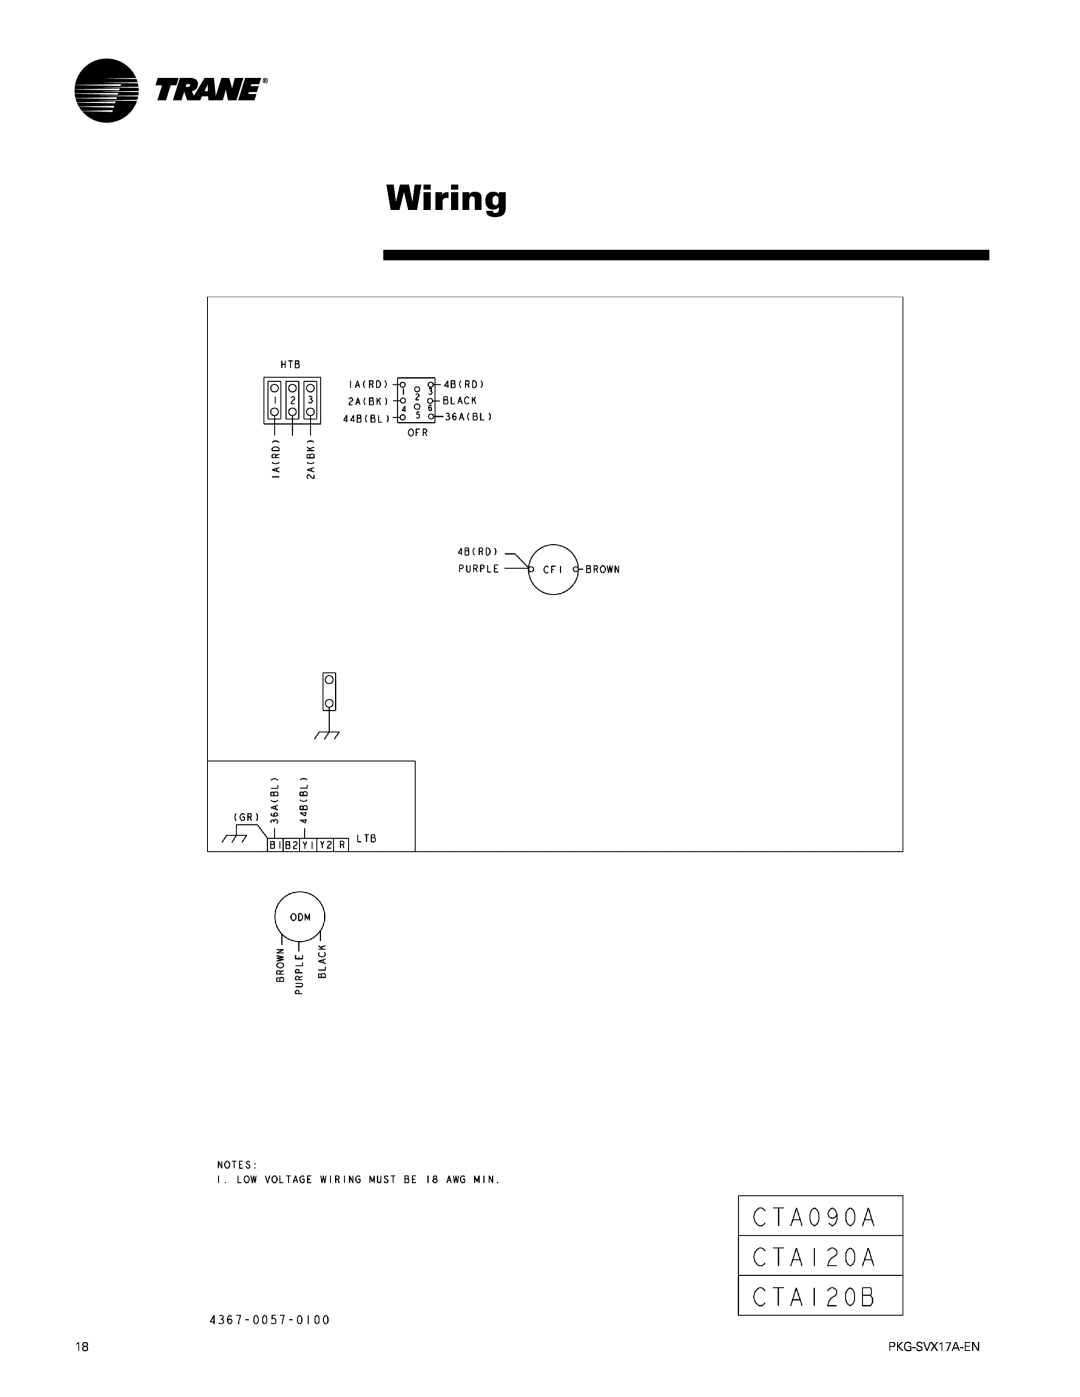 Trane PKG-SVX17A-EN manual Wiring 